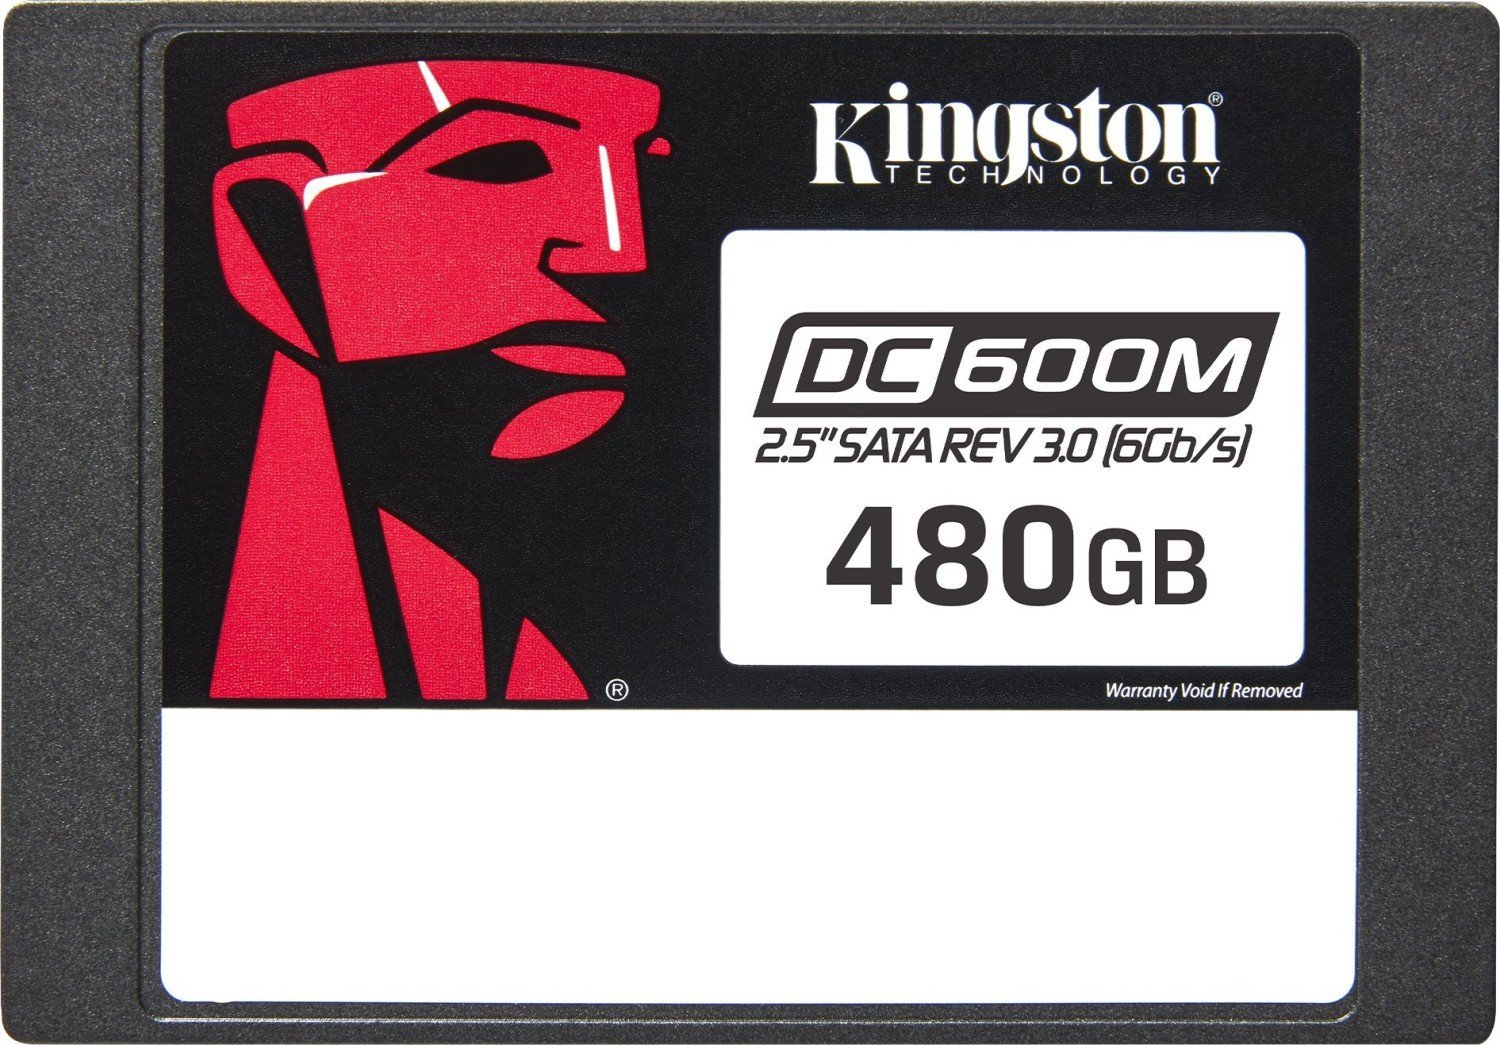 KINGSTON 480GB DC600M 2.5inch SATA3 SSD SSD disks